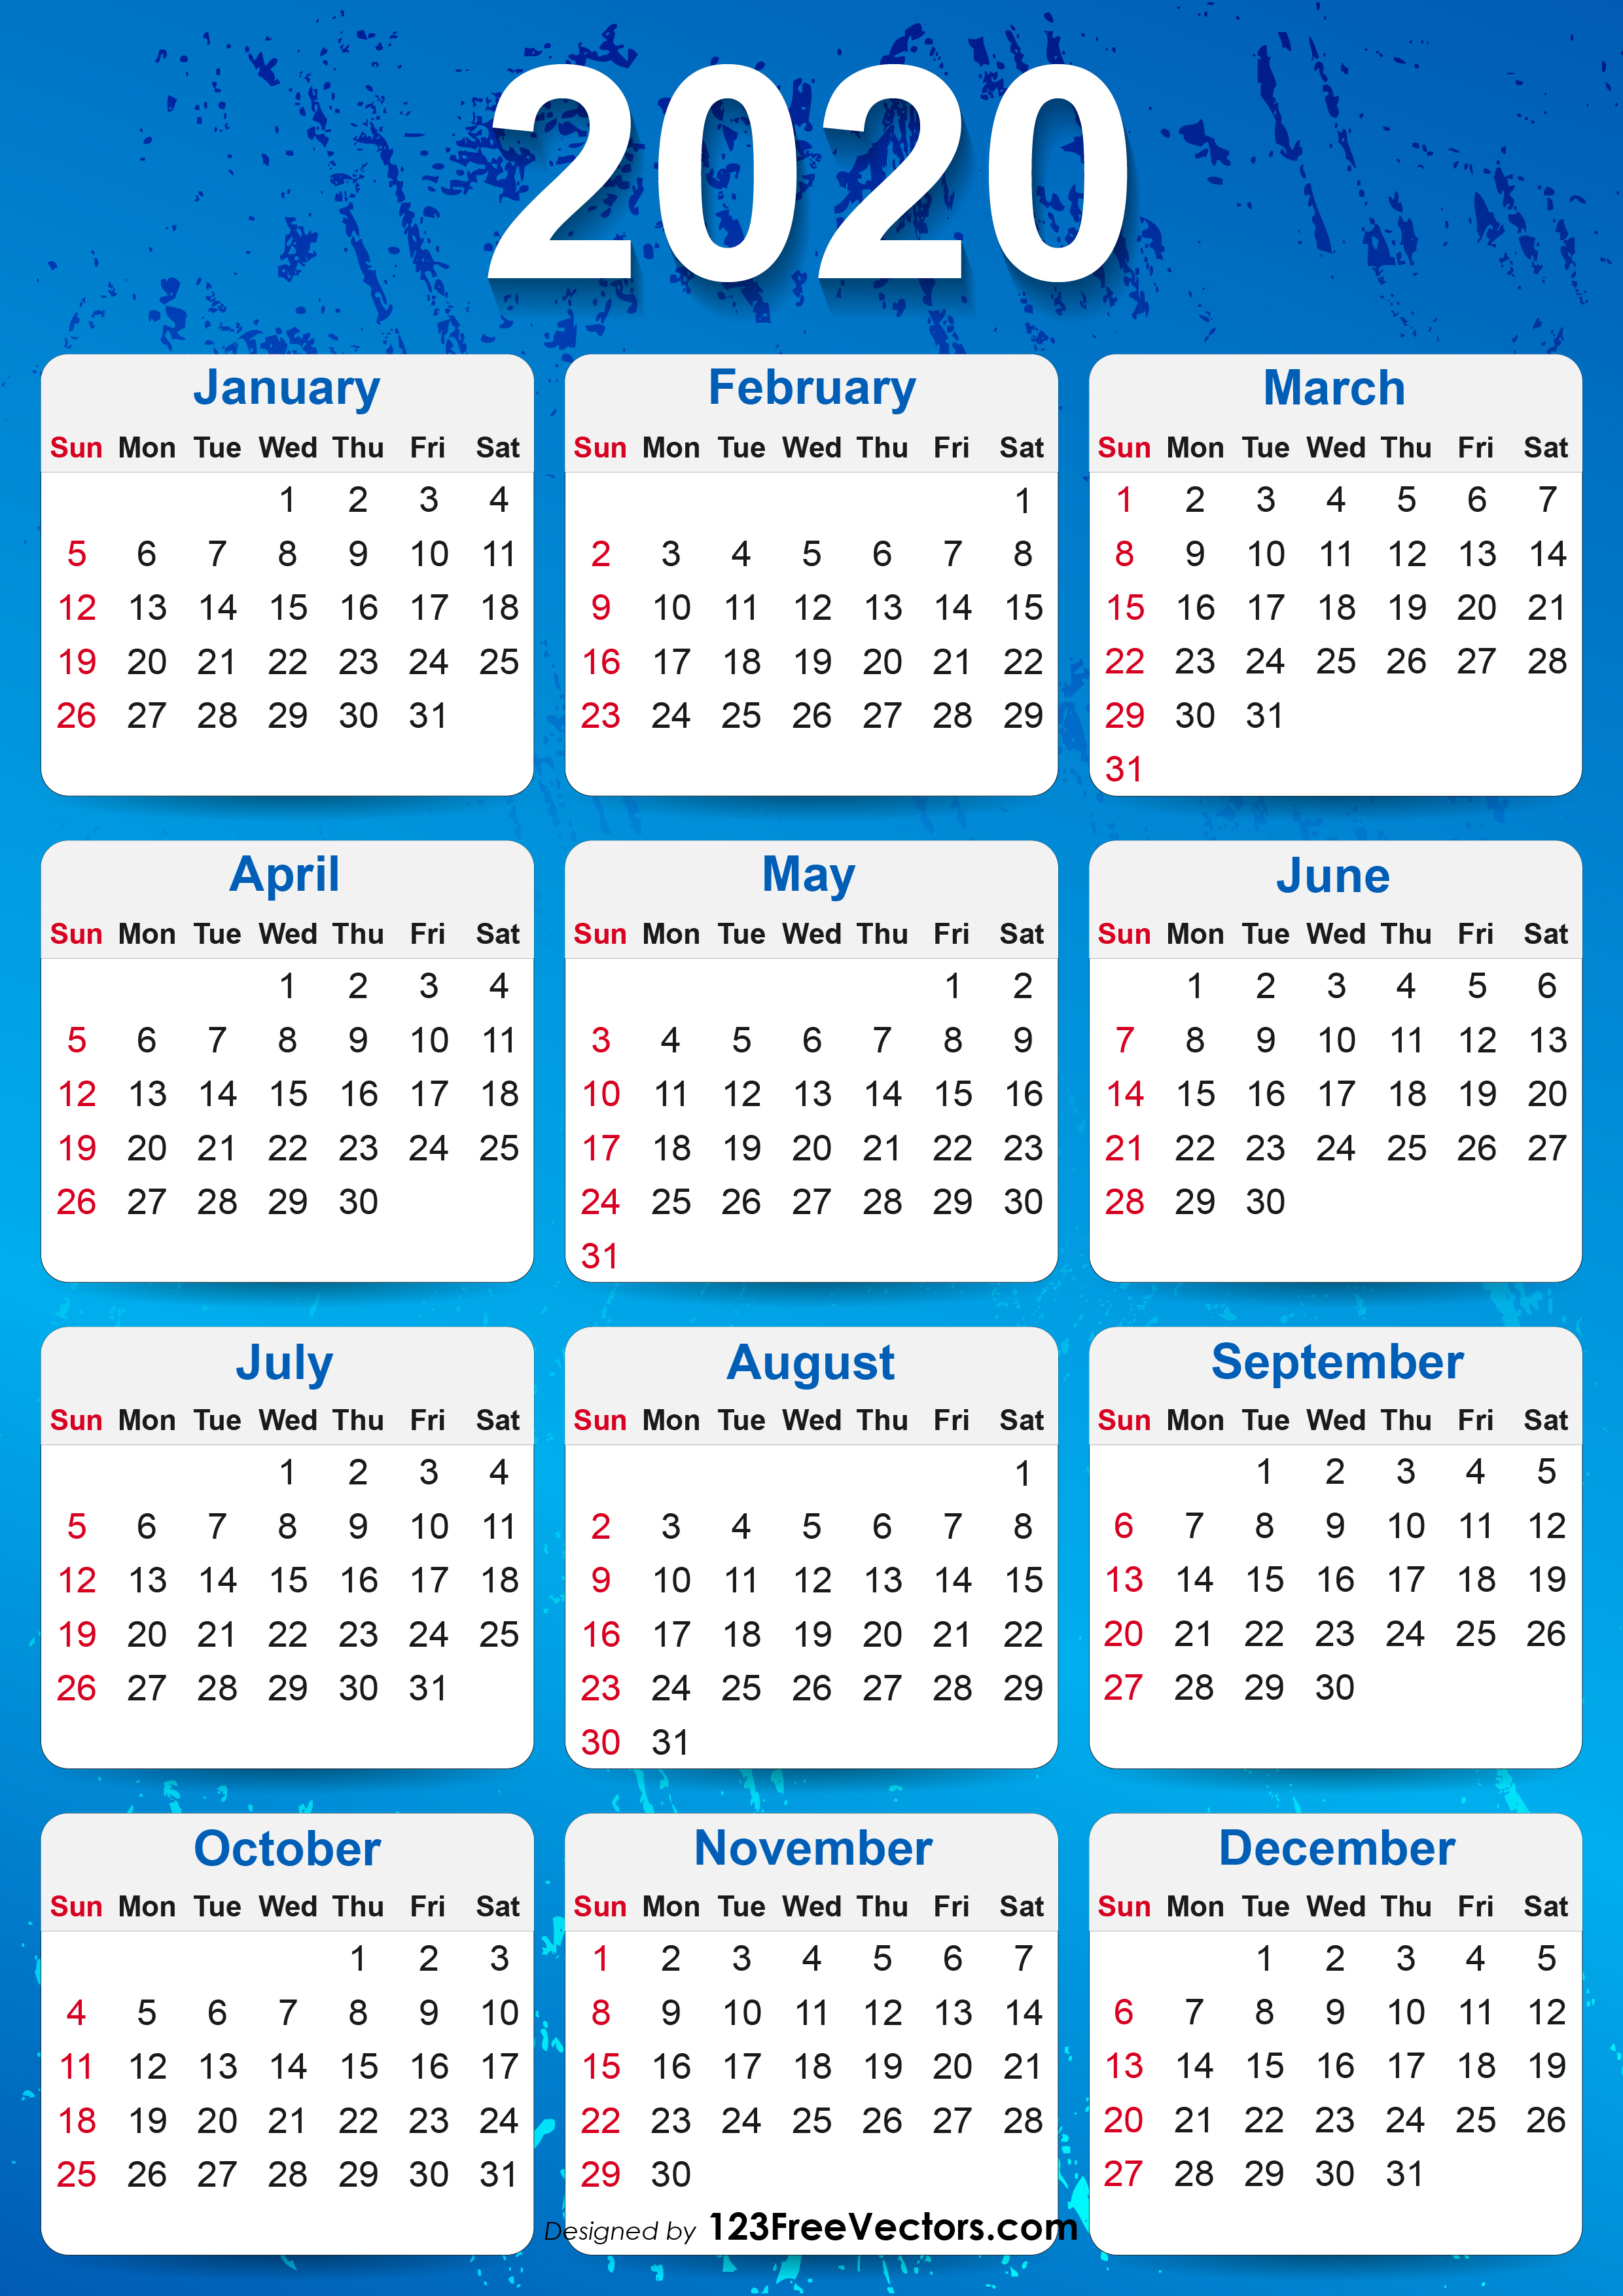 2020 Yearly Calendar Printable intended for 2020 Calendar Printable